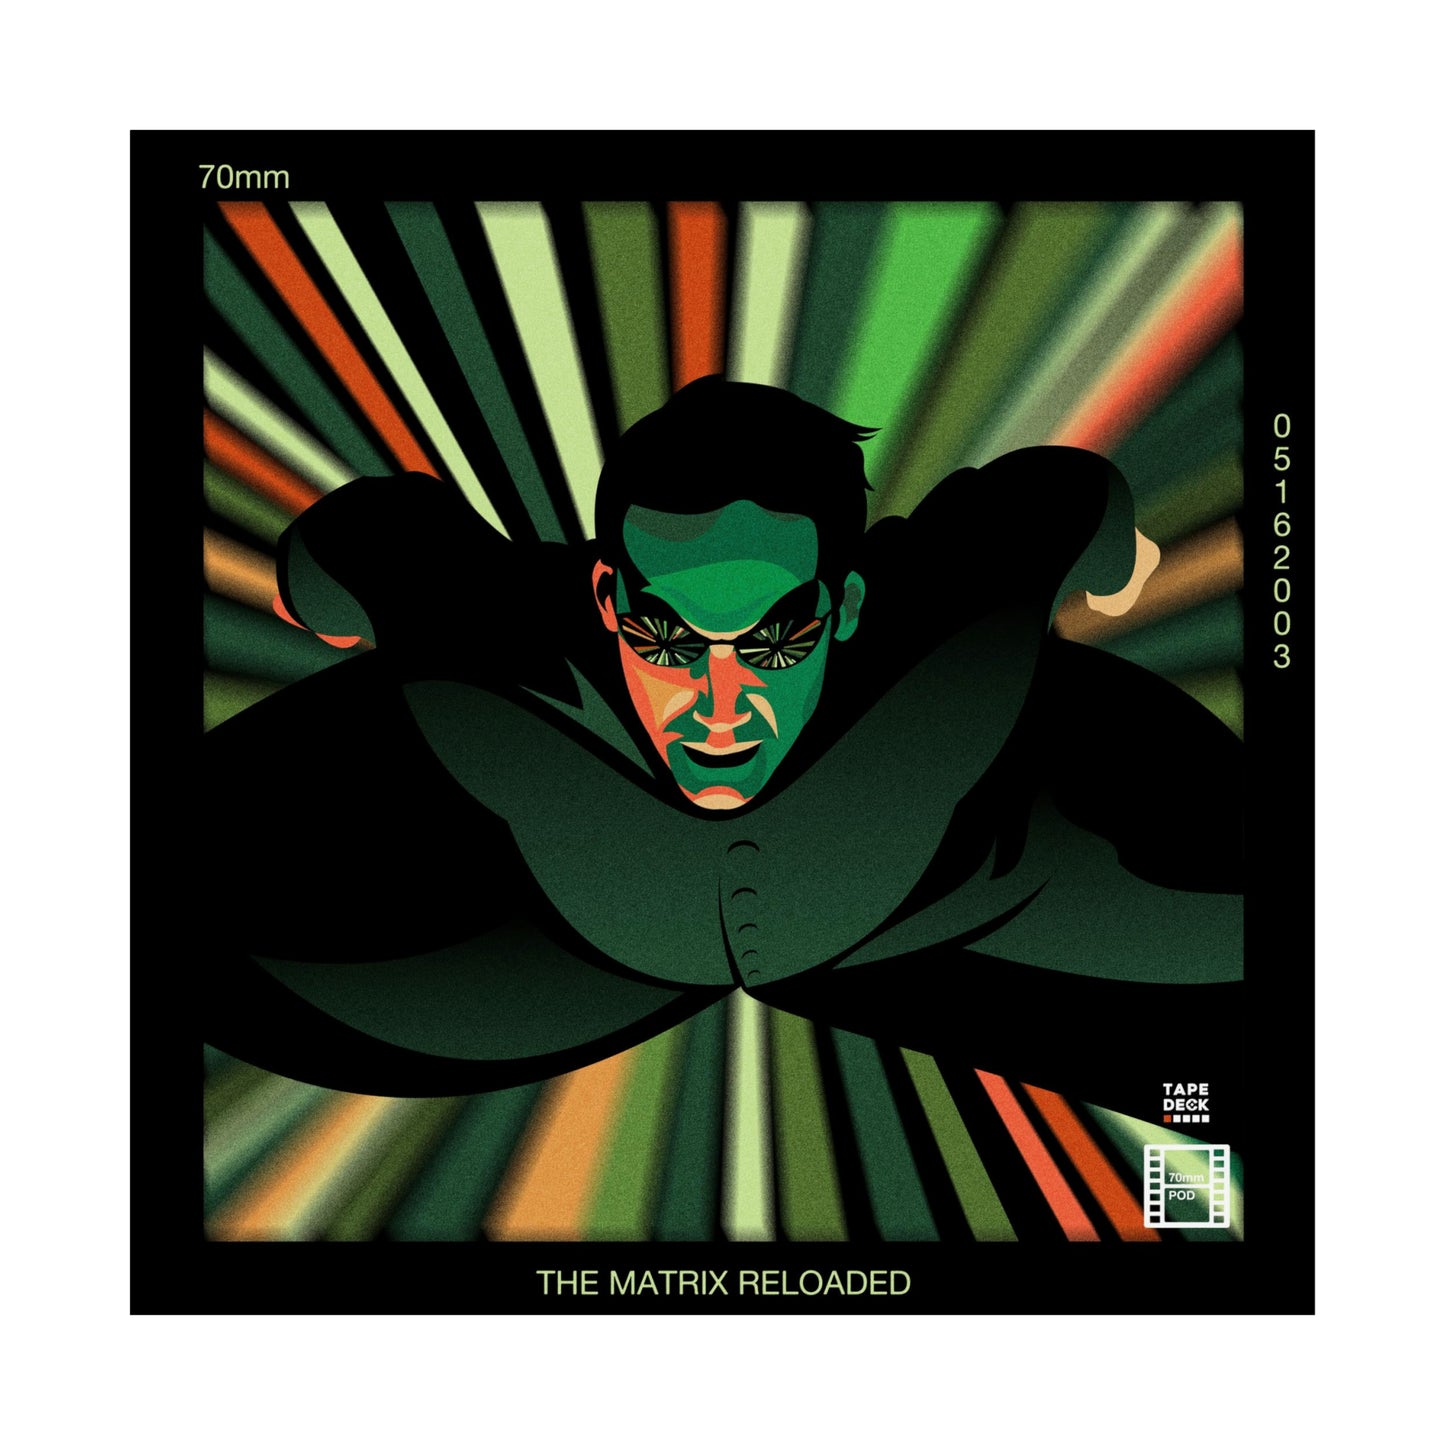 Bonus Episode: The Matrix Reloaded